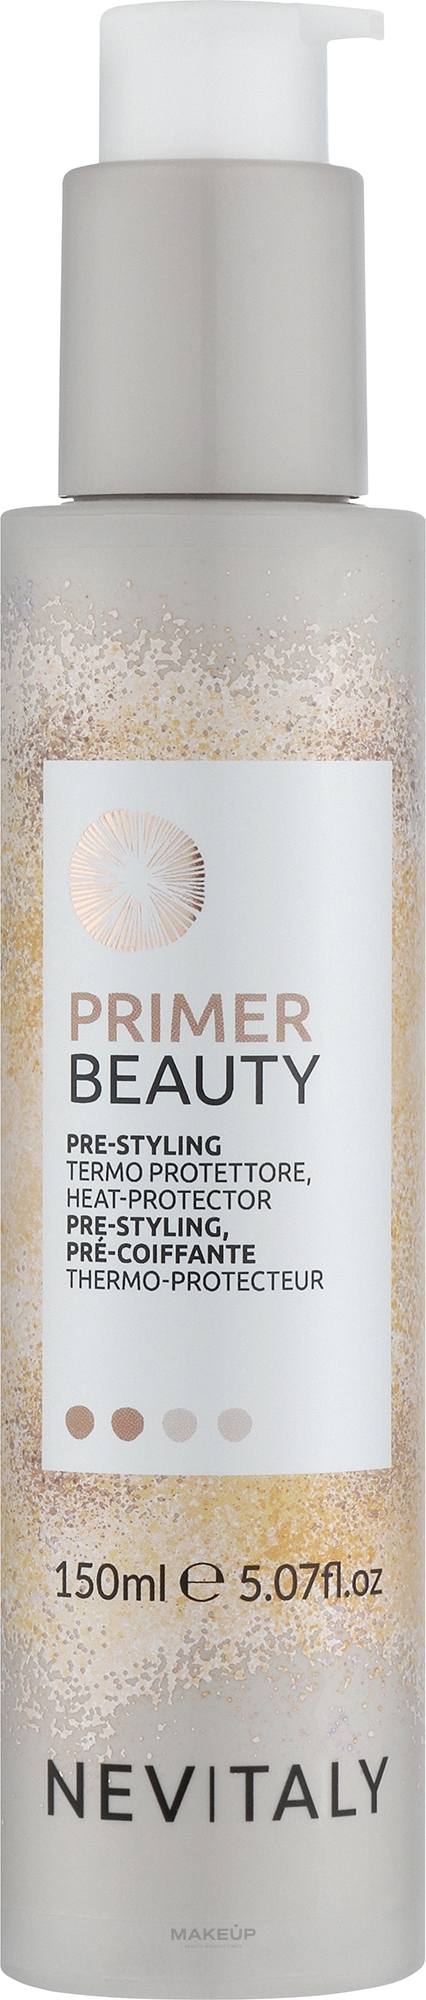 Крем-праймер - Nevitaly Primer Beauty — фото 150ml